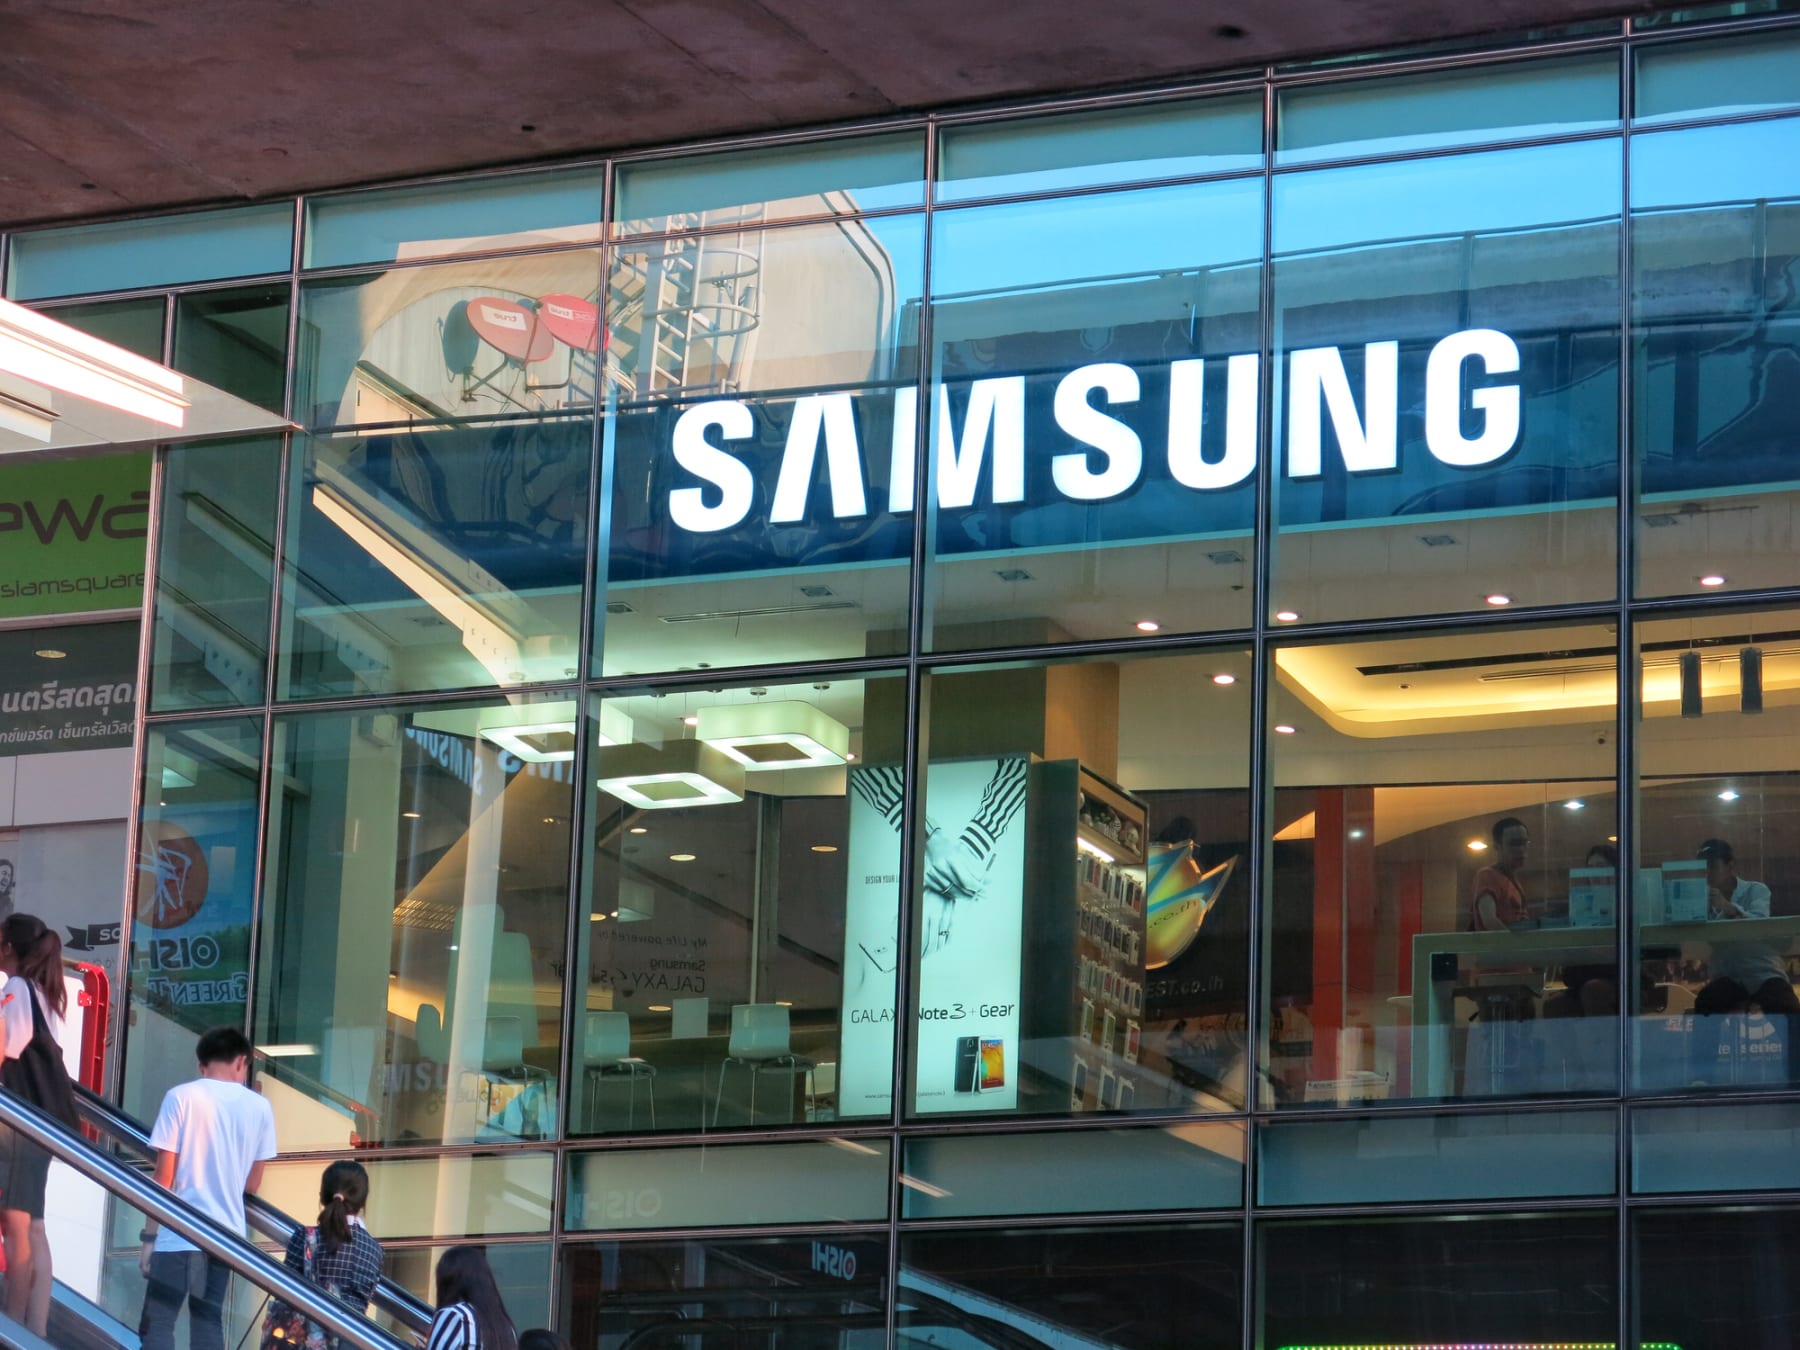 Samsung store selling Galaxy phones